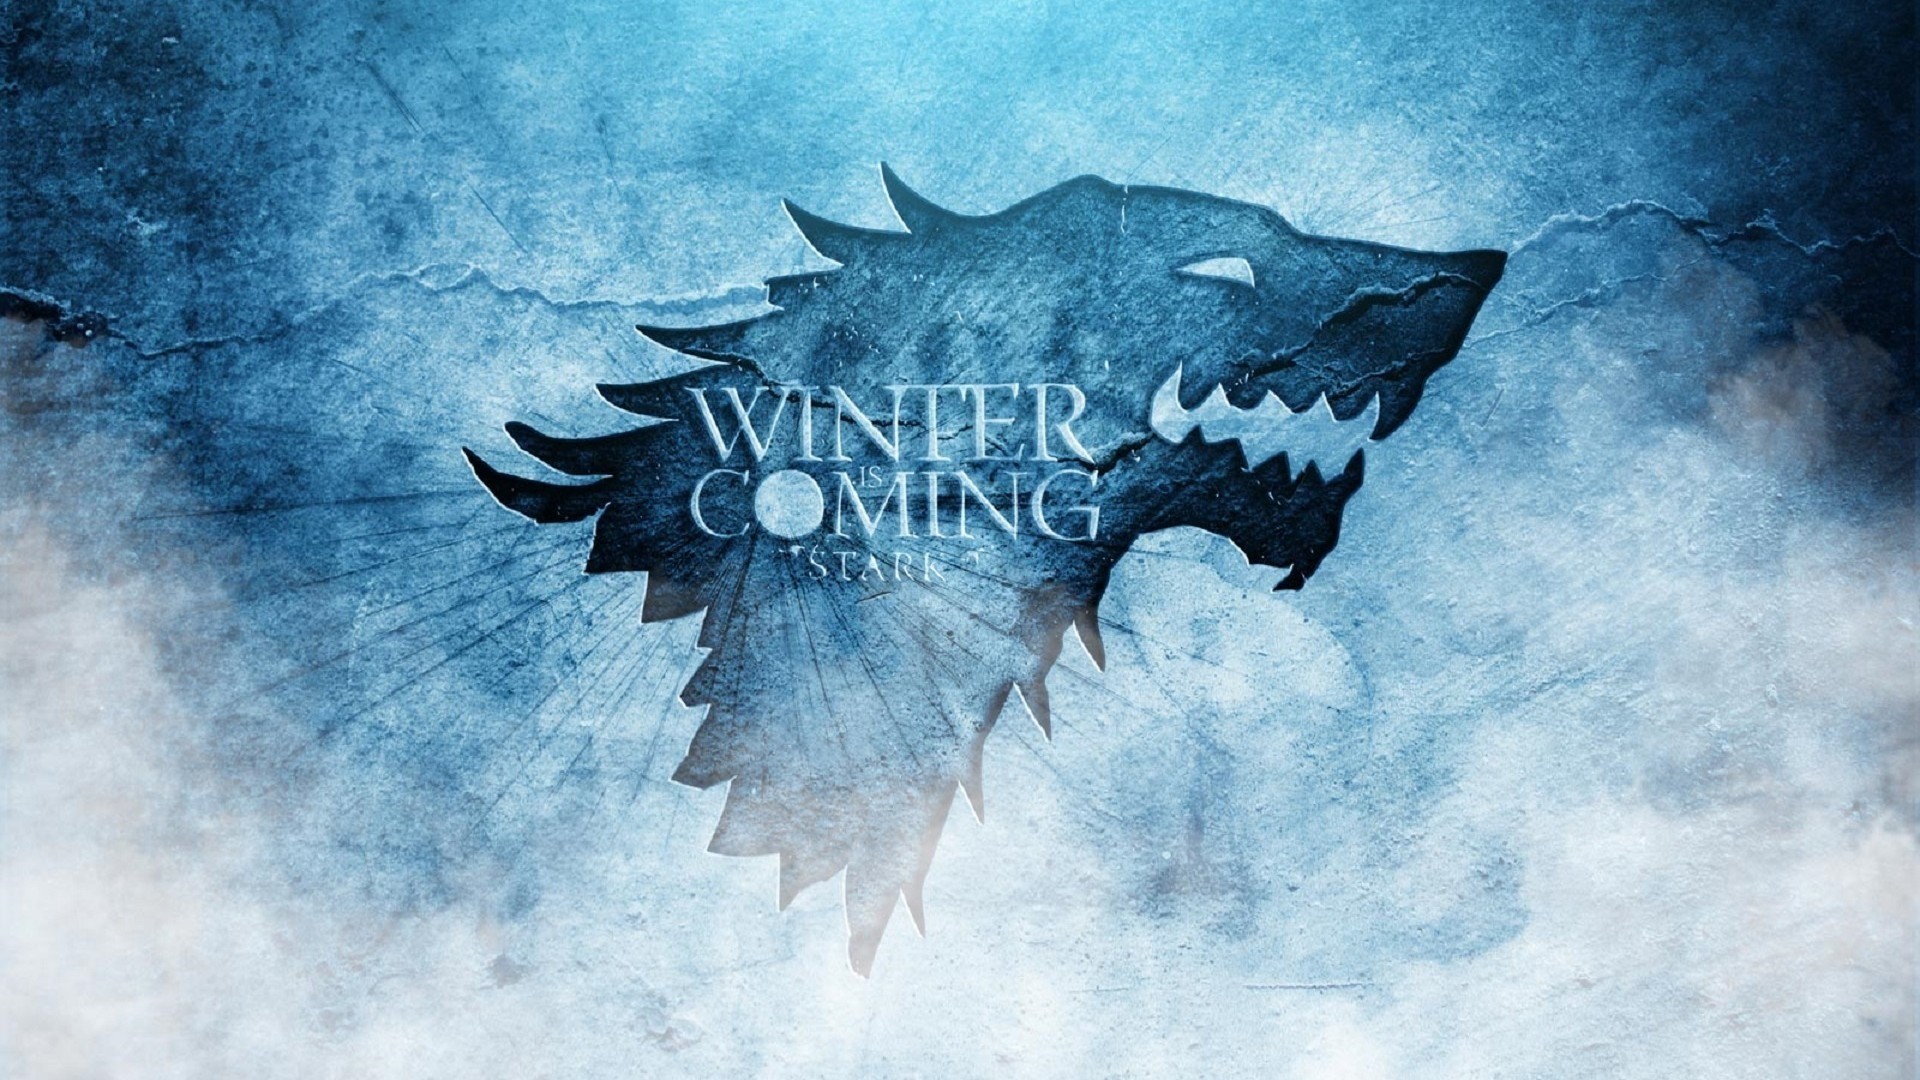 Game of Thrones desktop wallpaper ·① Download free backgrounds for